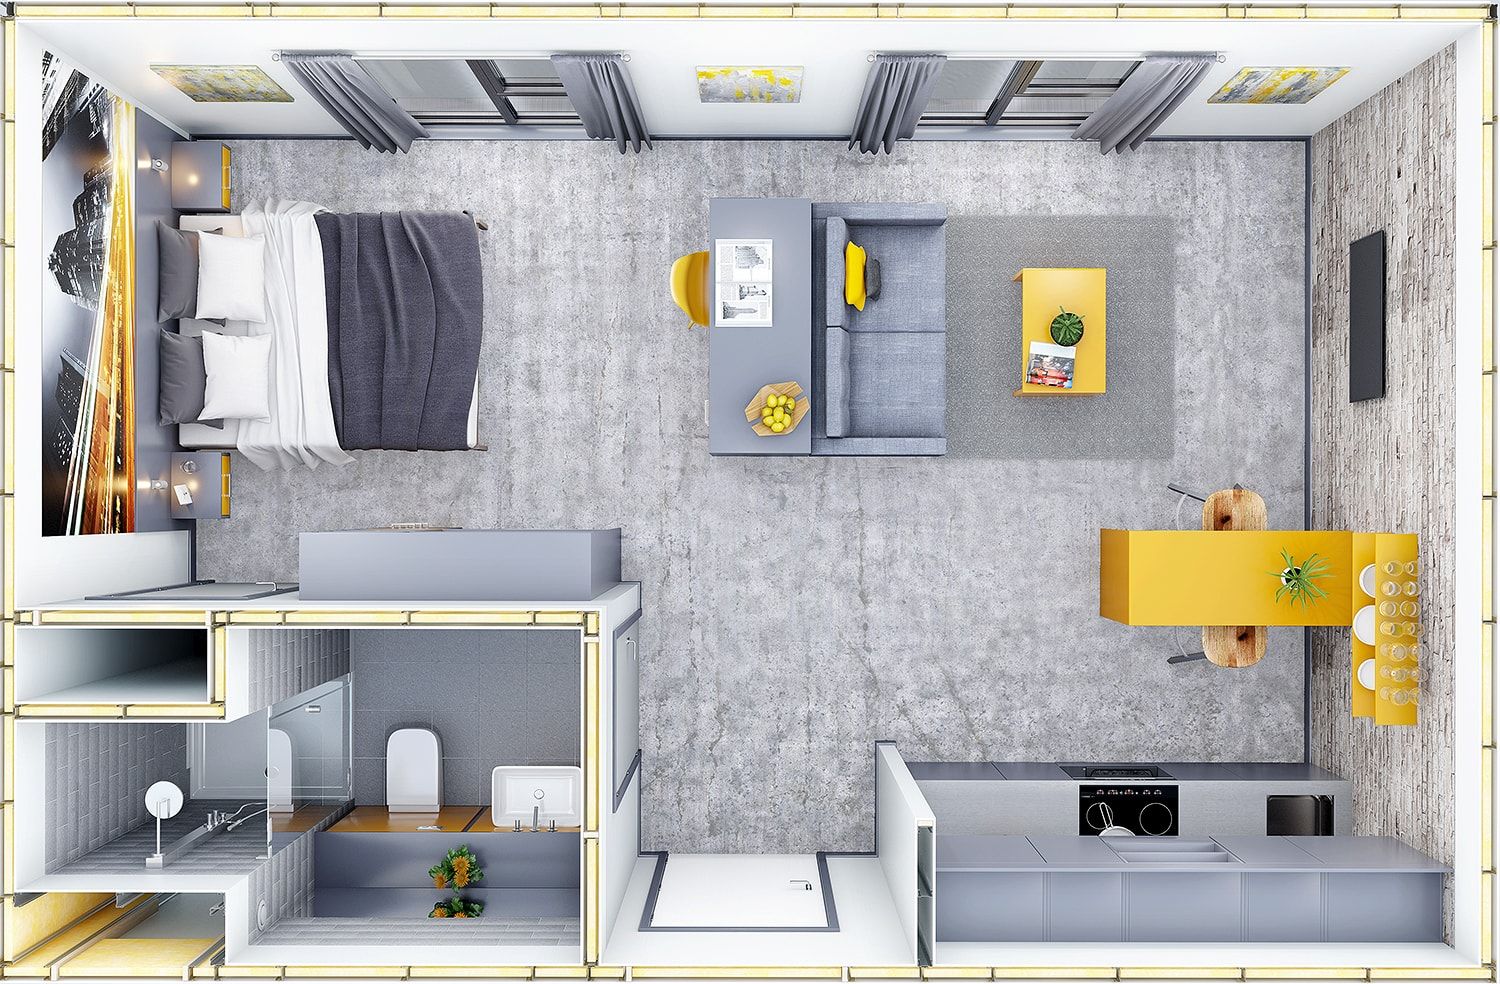 Plan view of studio Apartment CRISP3D Dormitorios de estilo moderno Ladrillos internalCGI,visualisation,CGI,3dvisualisation,studio